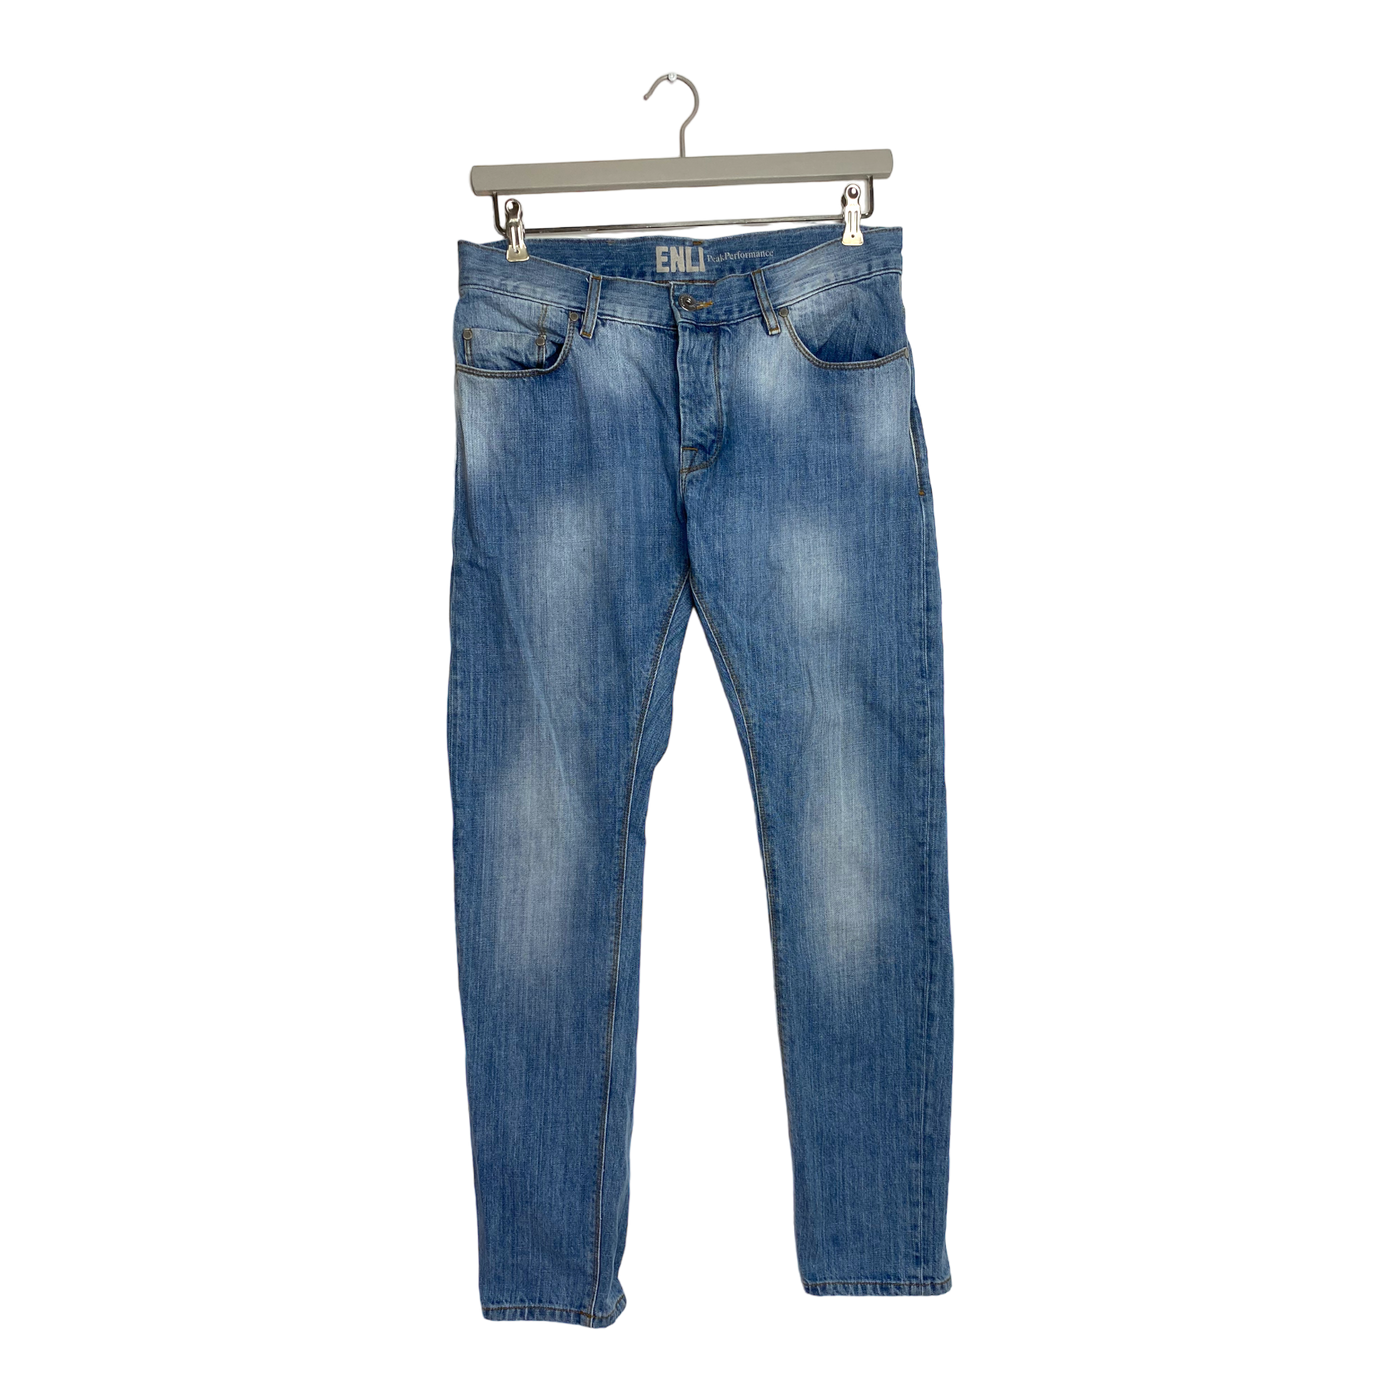 Peak Performance enli jeans, baby blue | man 31/32